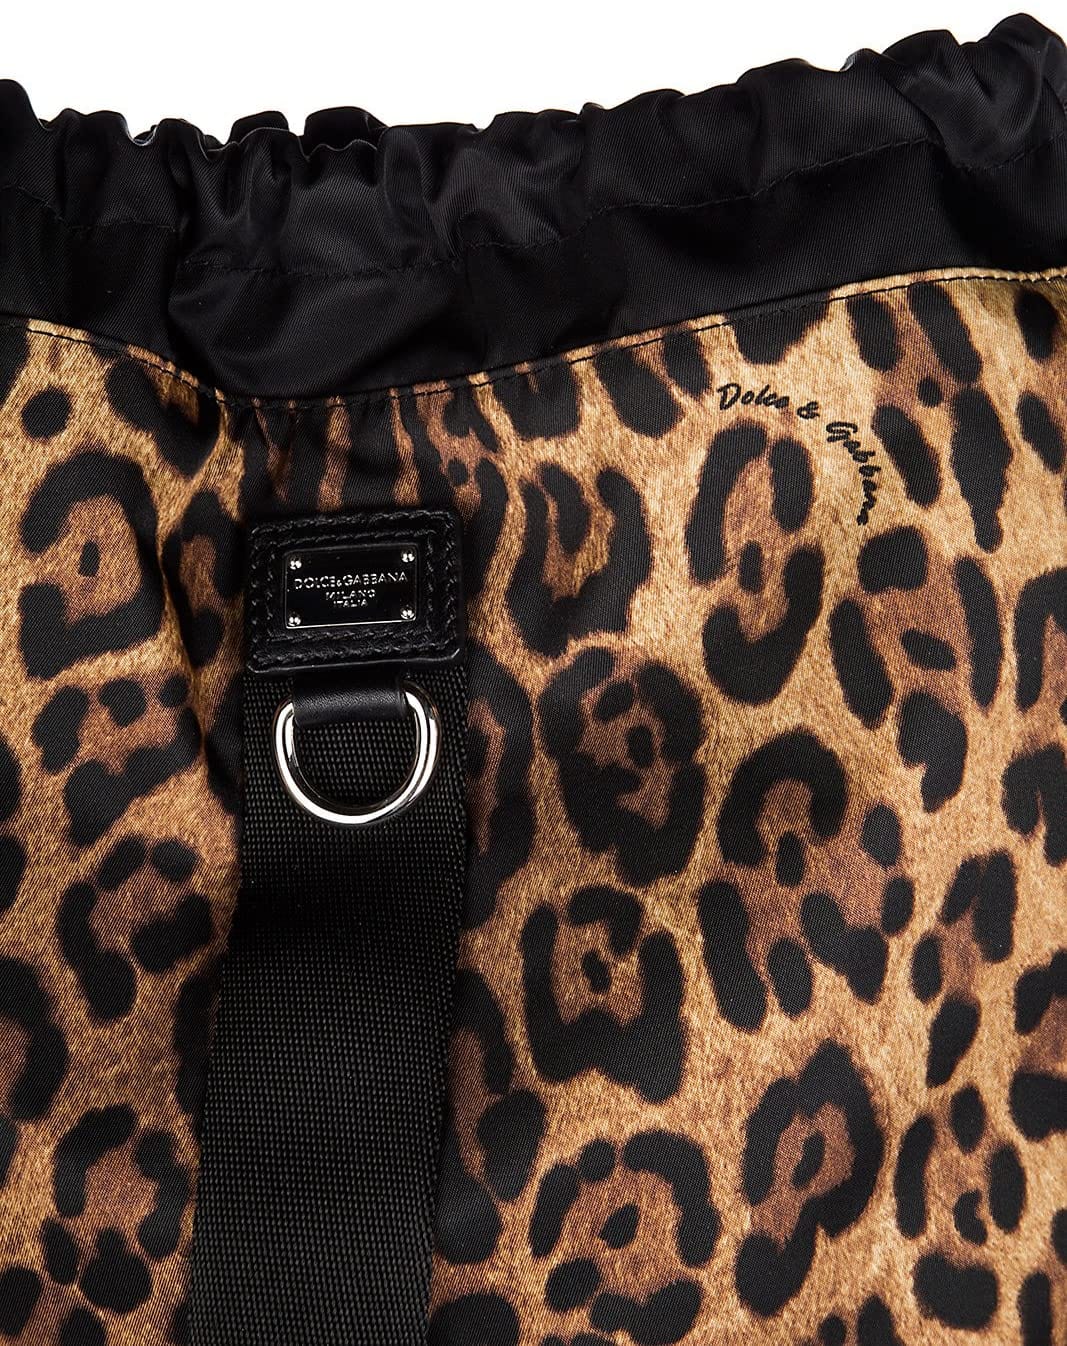 Dolce & Gabbana Leopard Drawstring Backpack